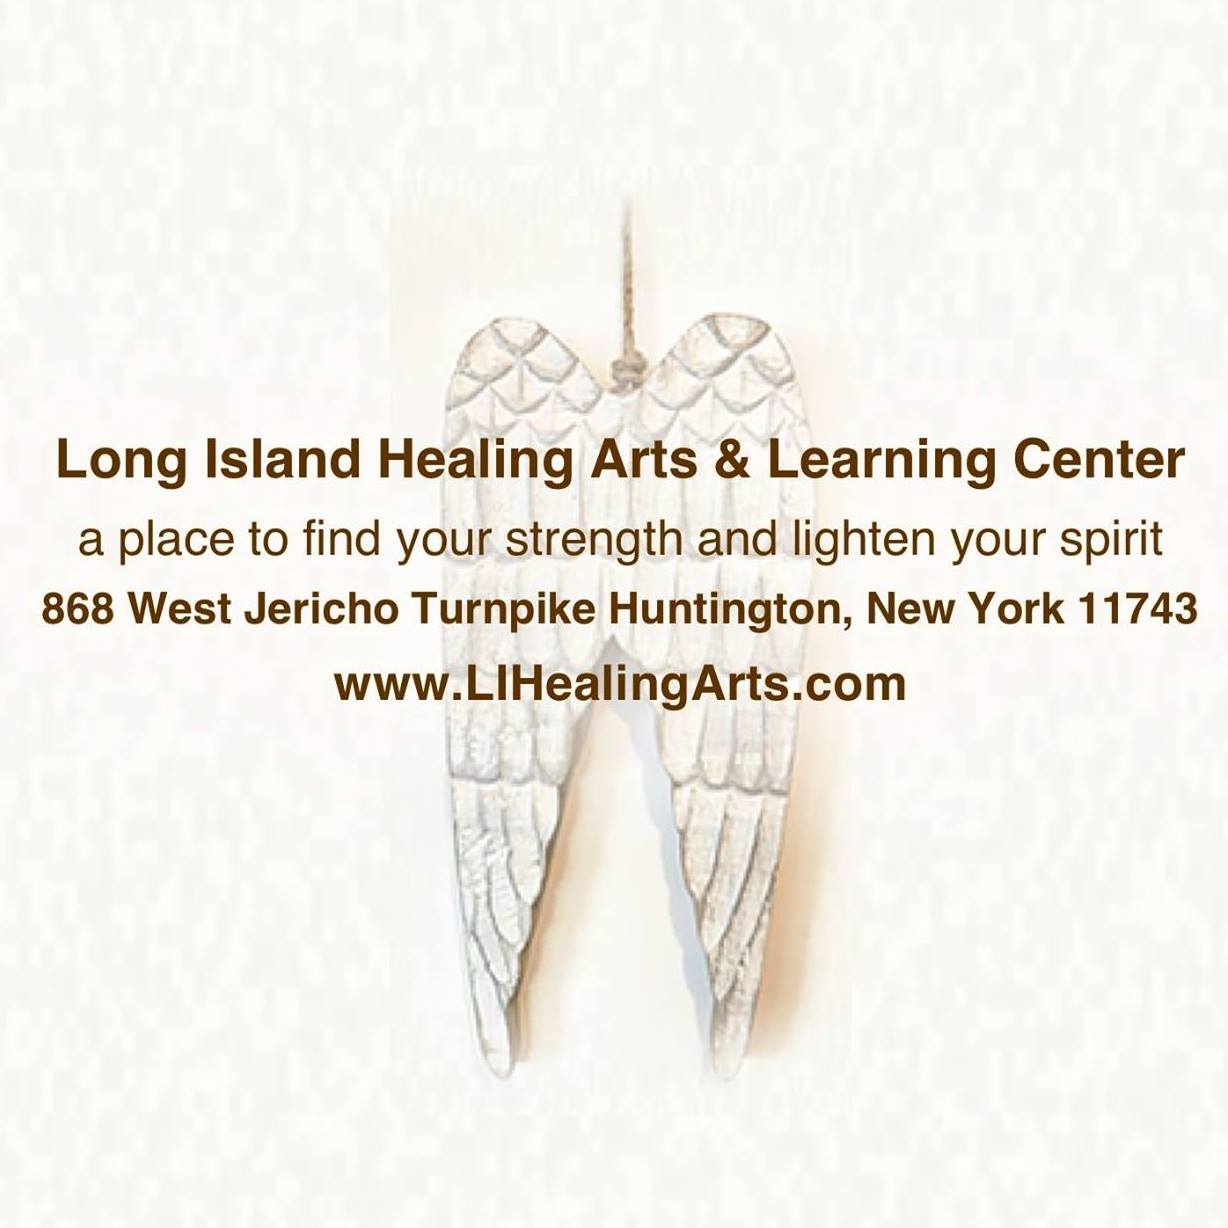 Long Island Healing Arts & Learning Center